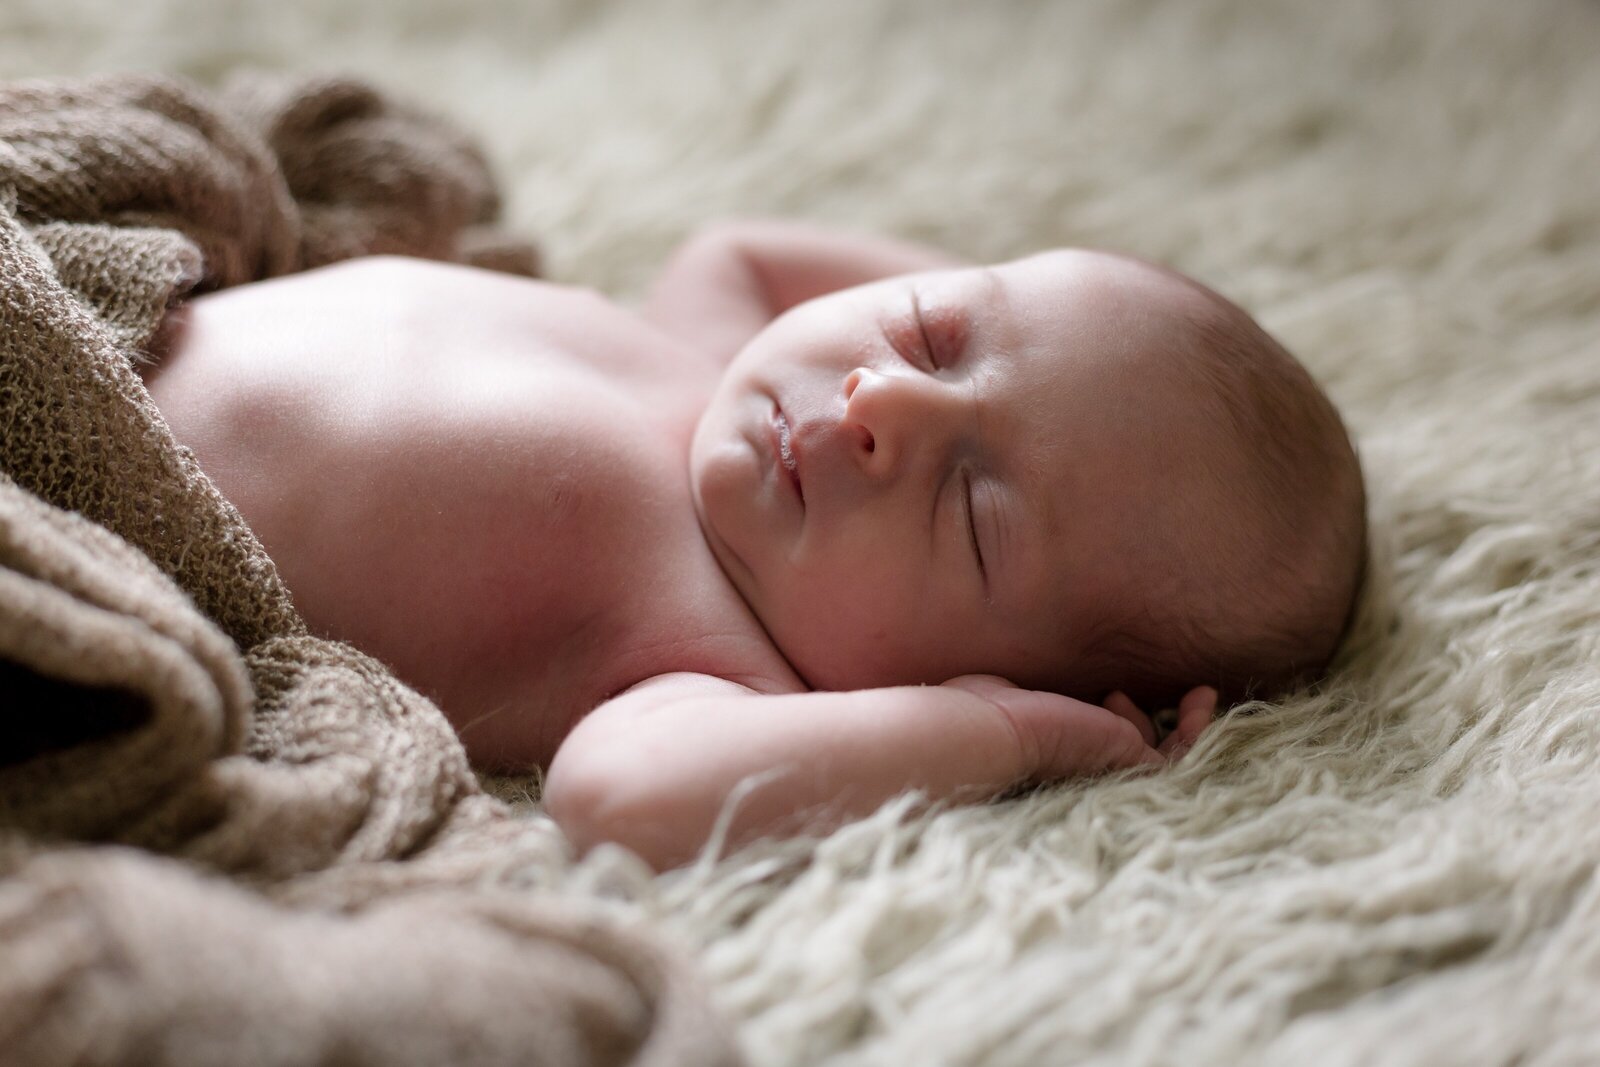 Newborn sleeping during photo session